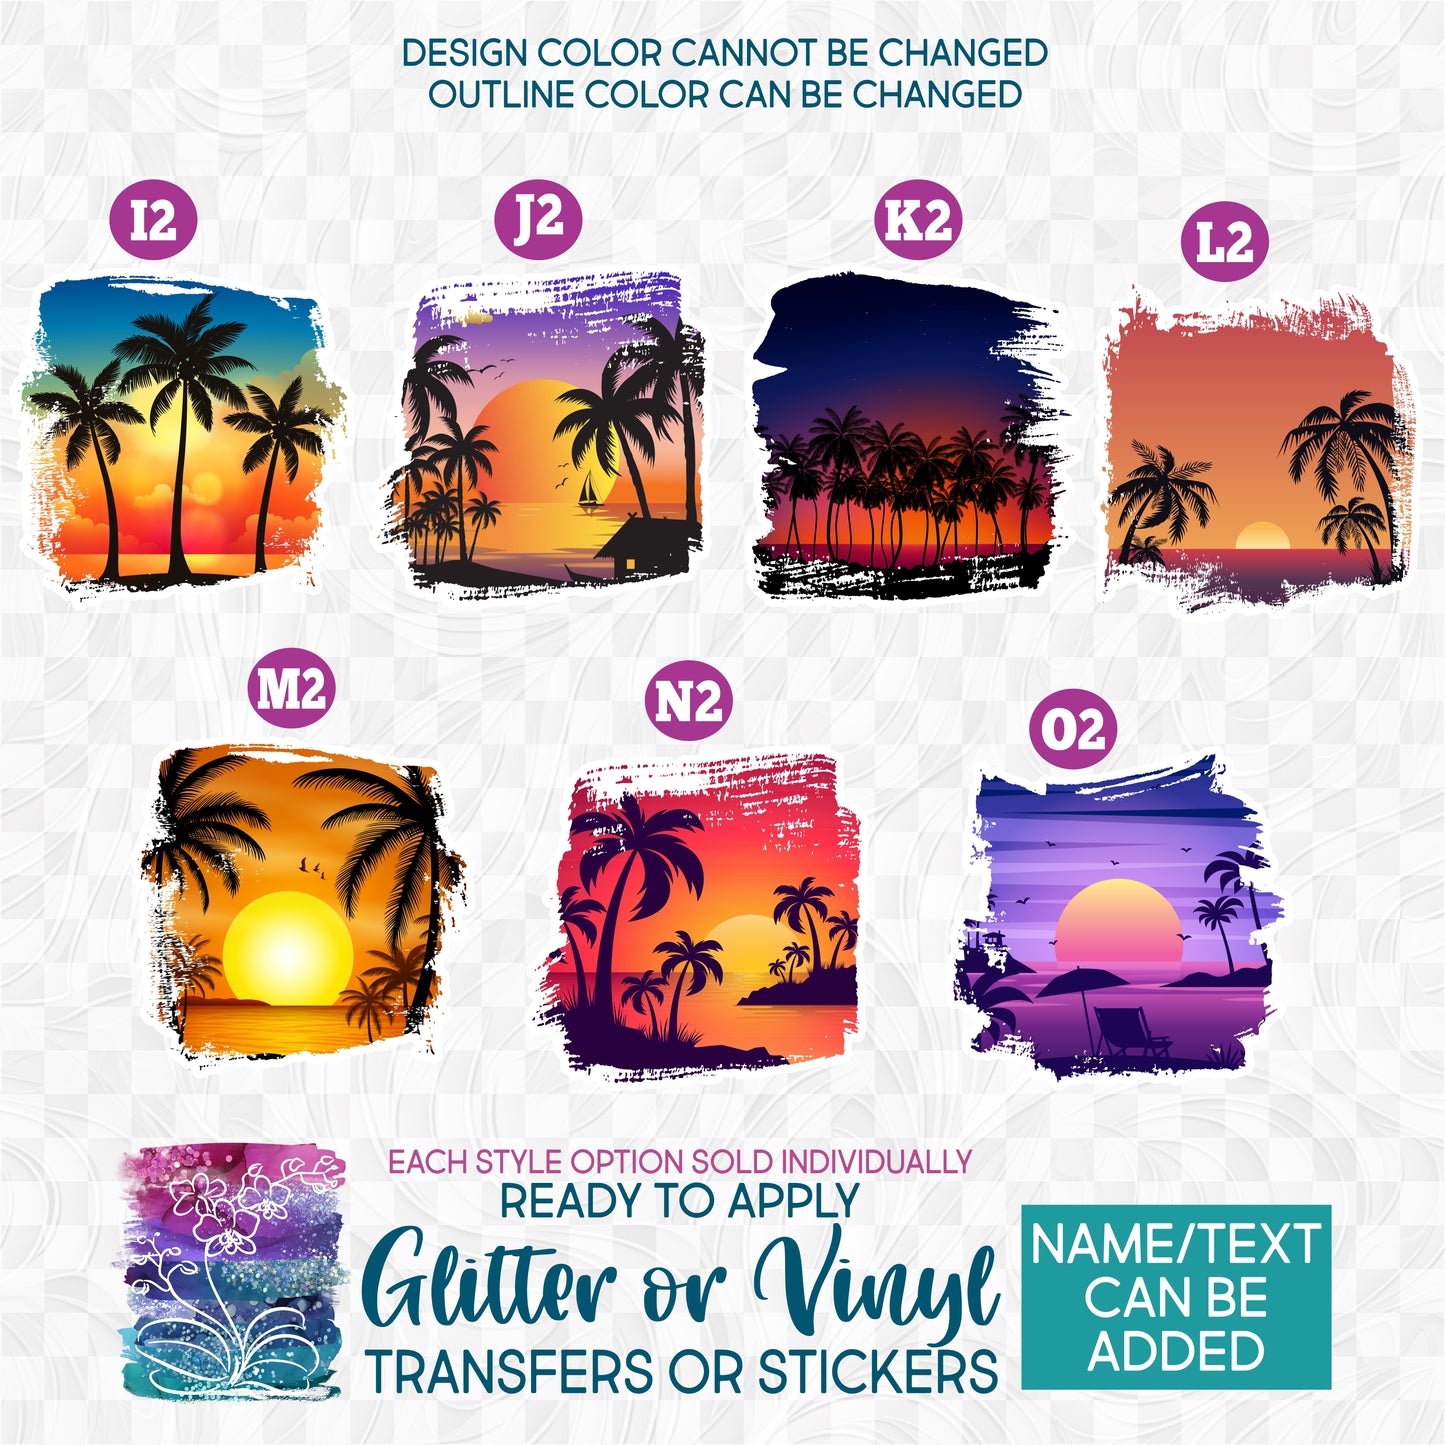 (s204-4) Watercolor Sunset Beach Ocean Tropical Seascape Landscape 4 Glitter or Vinyl Iron-On Transfer or Sticker